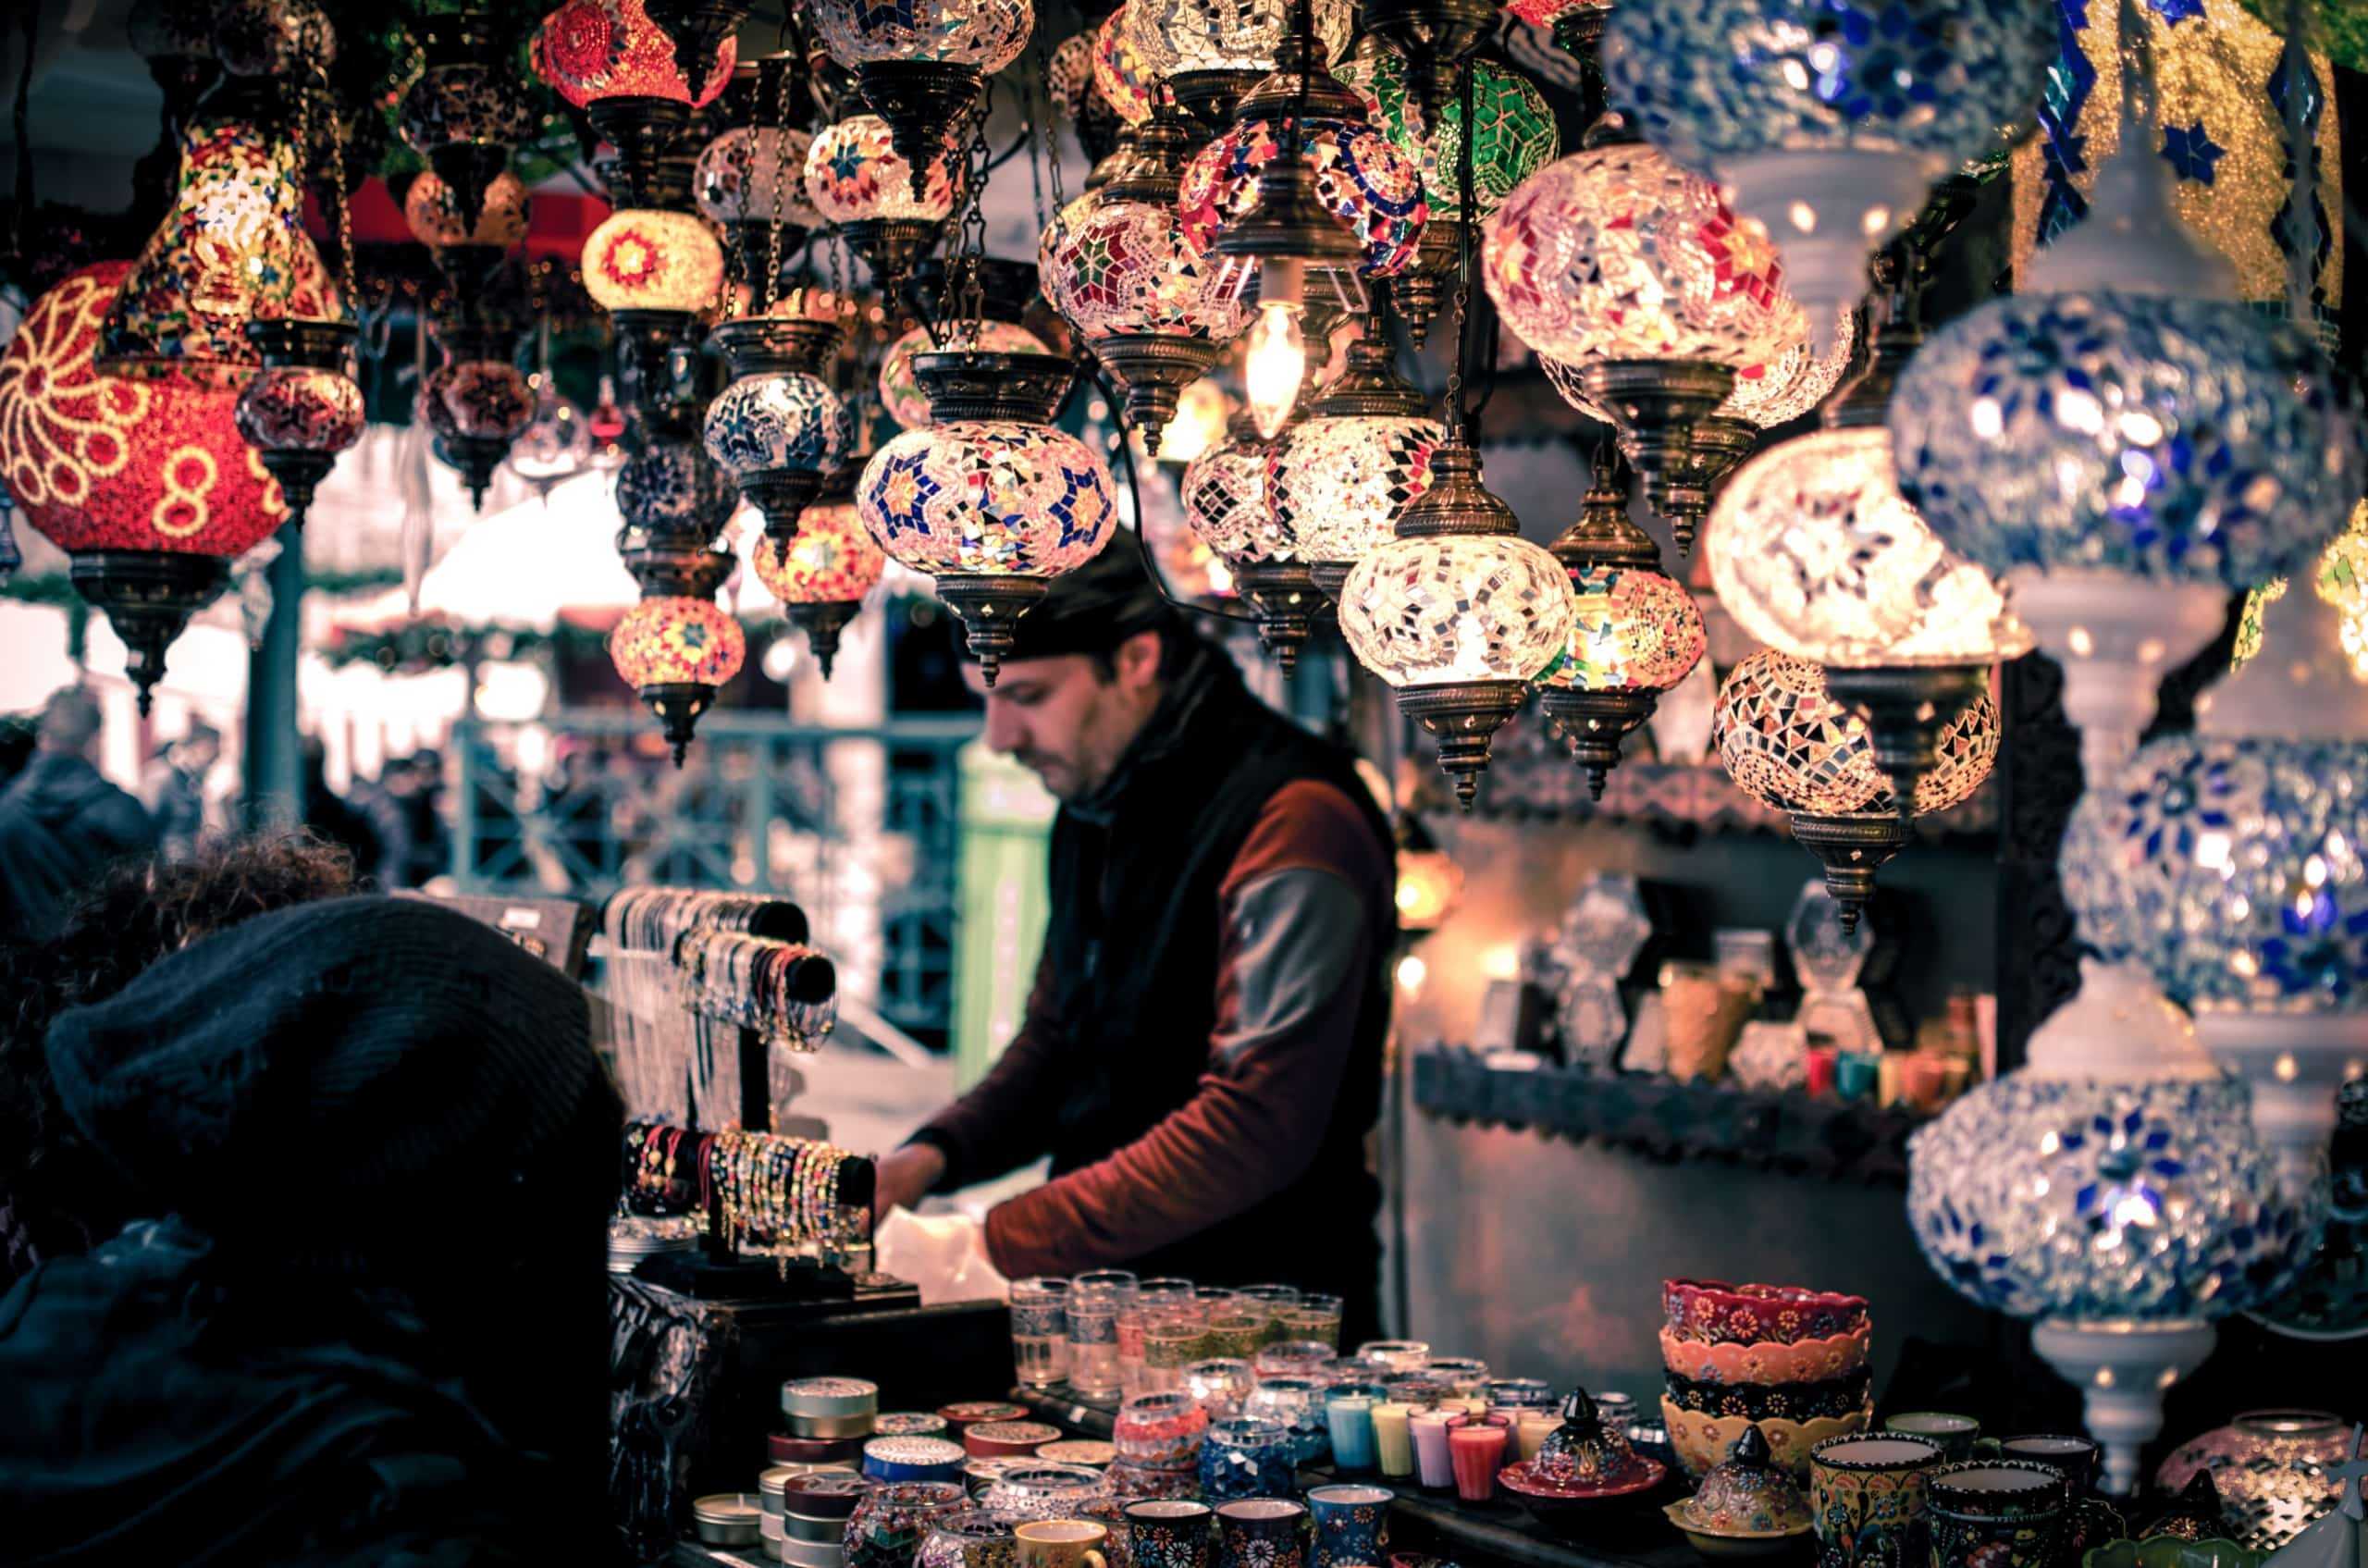 Vendor selling lanterns in Morocco